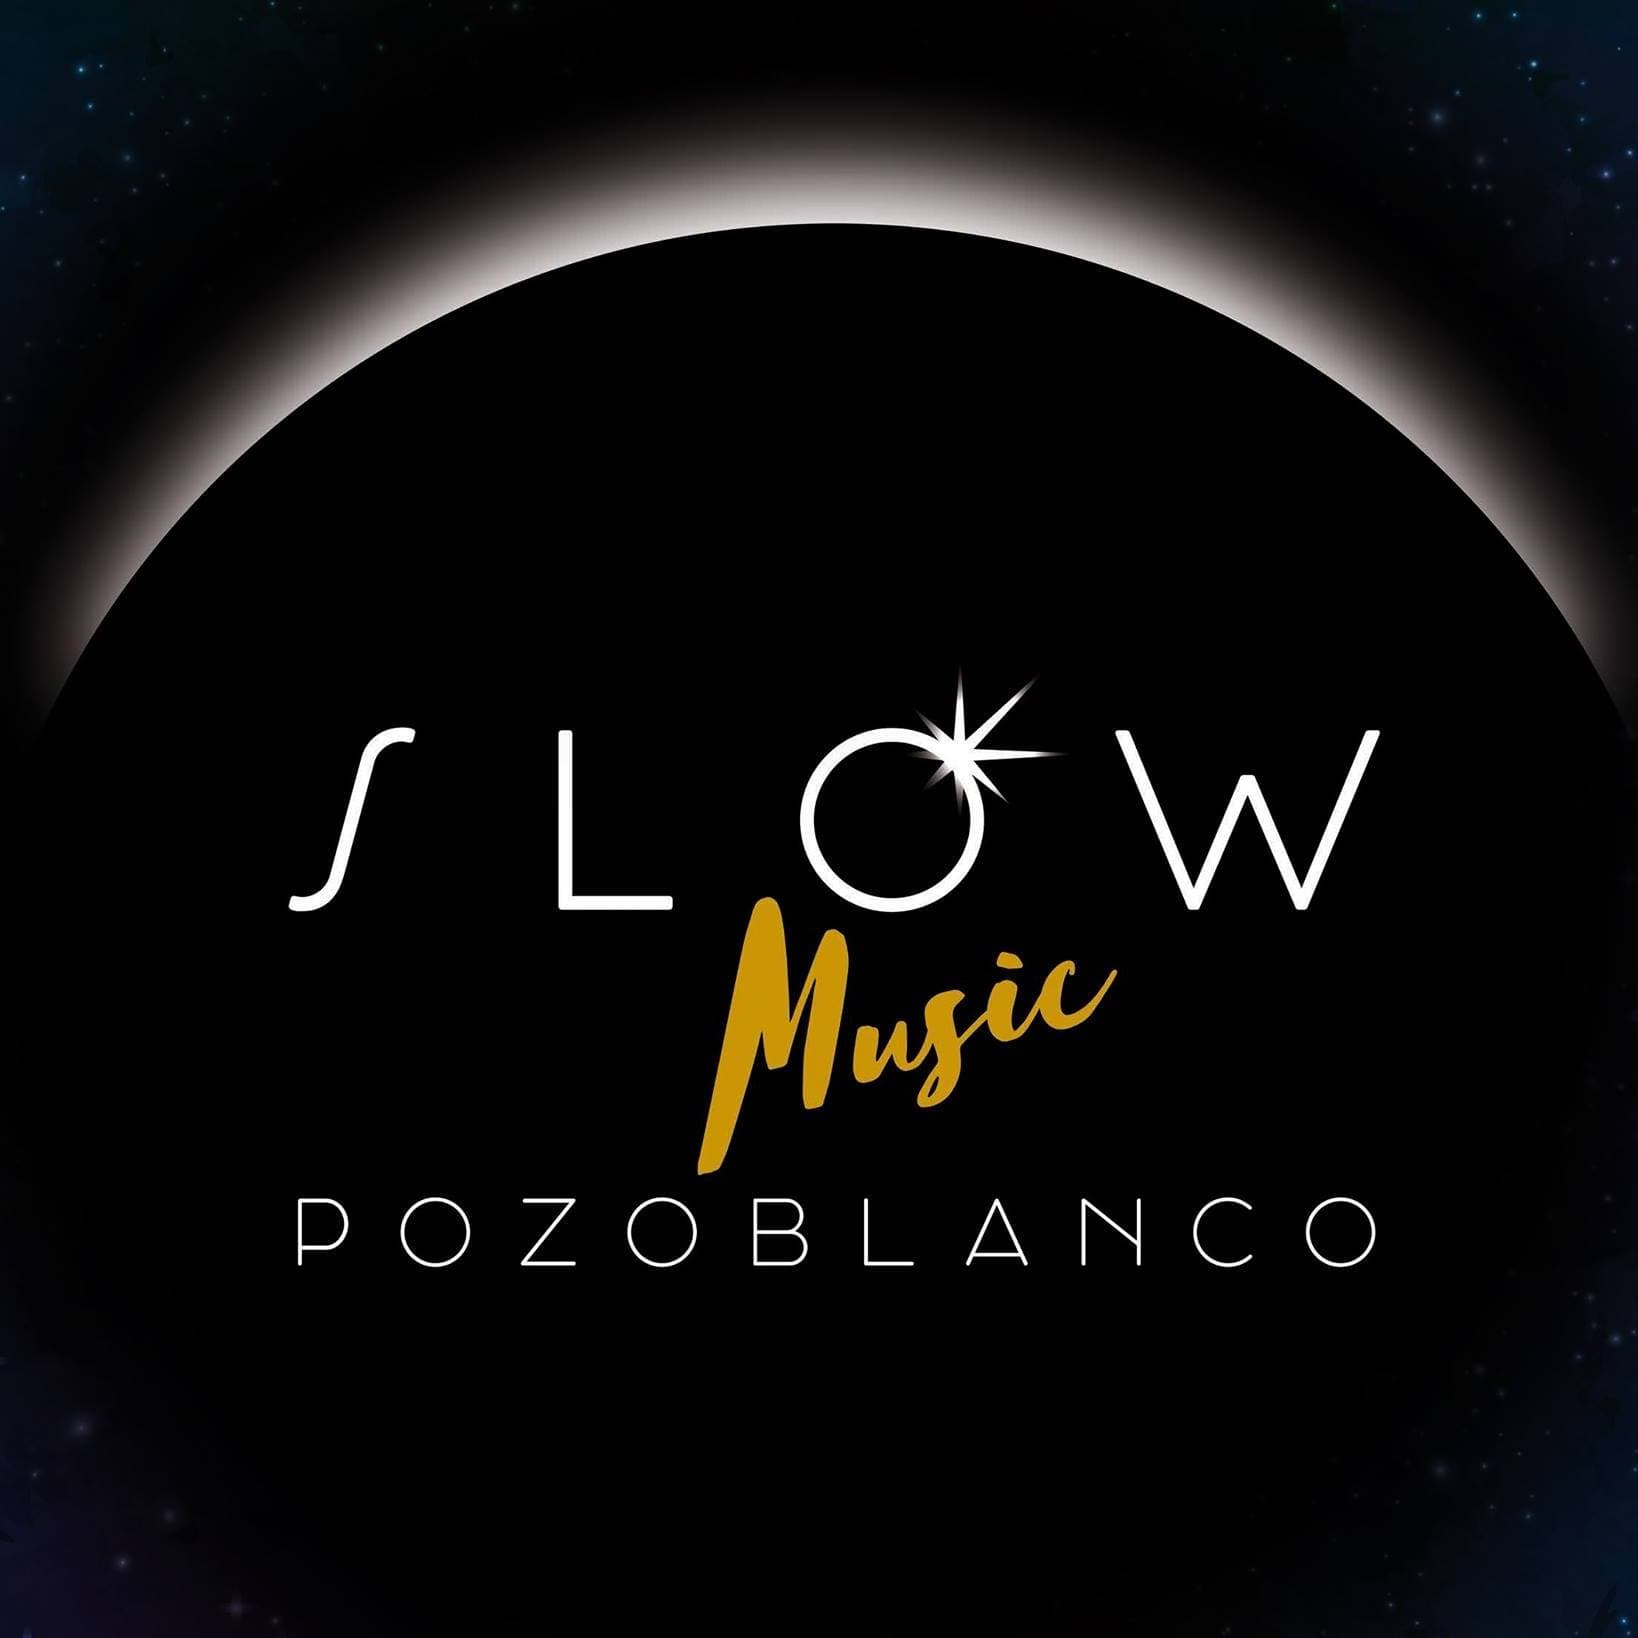 Slow Music Pozoblanco